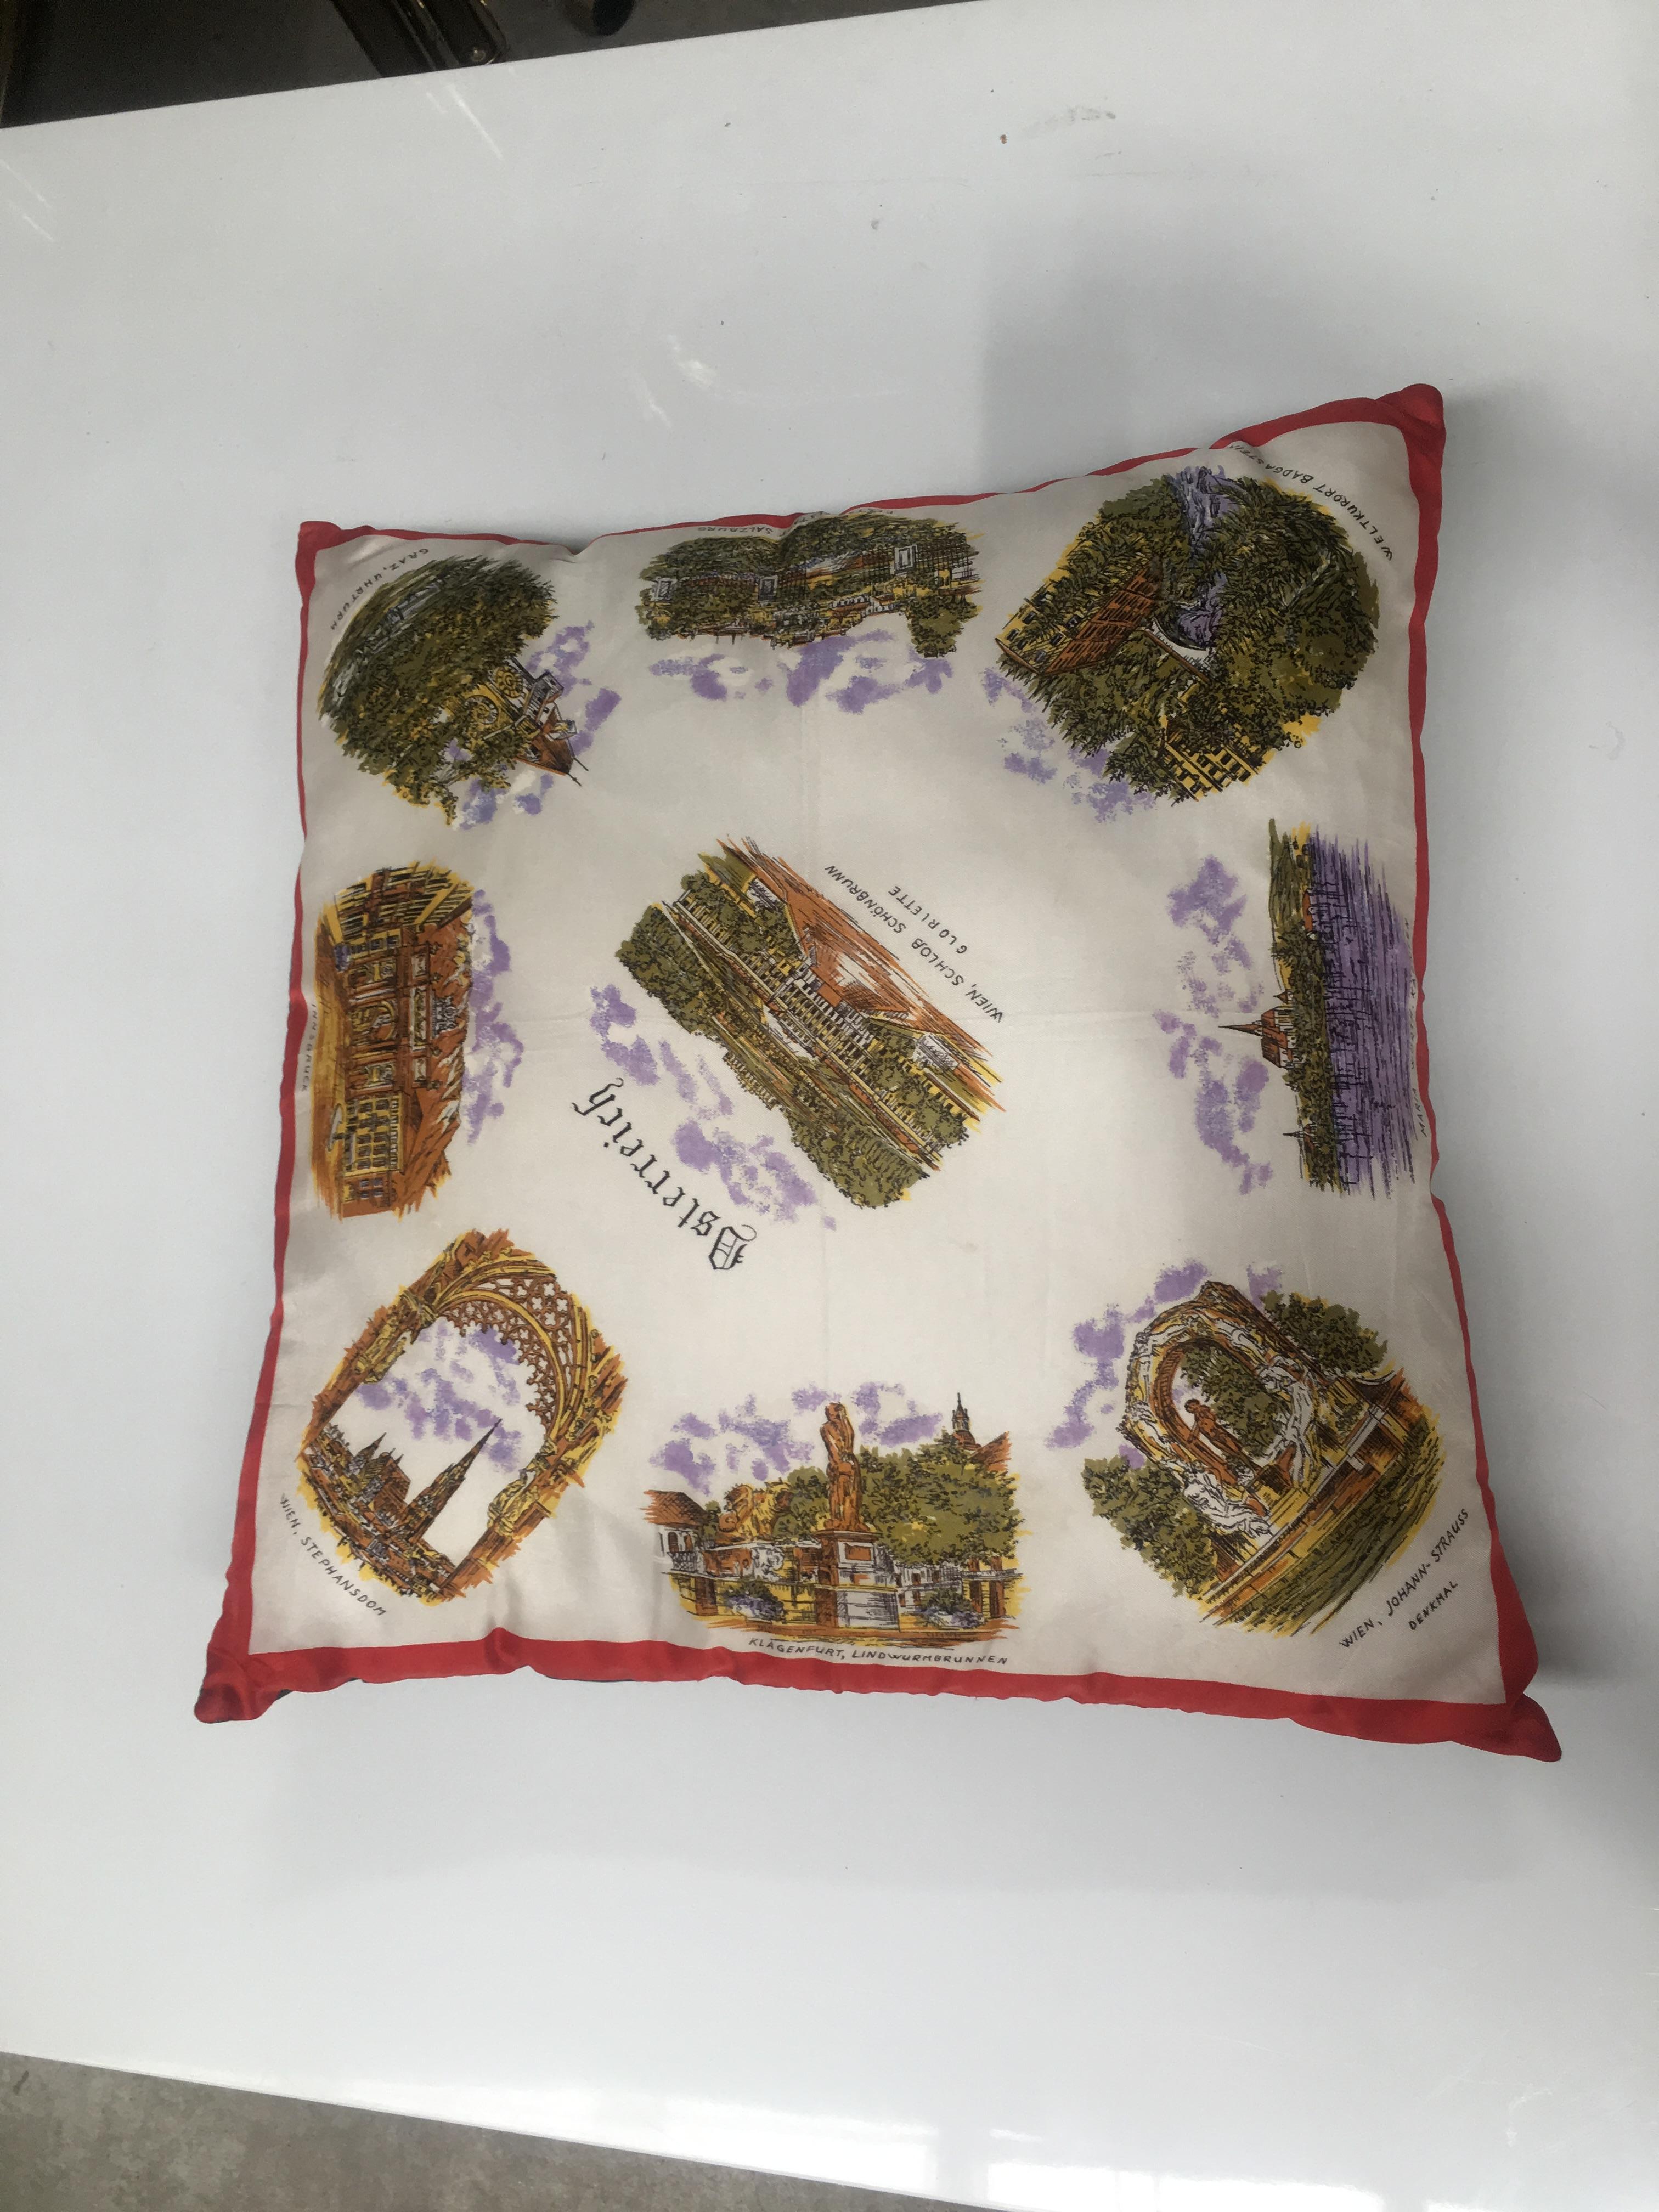 Mid-Century Modern Italian Vintage Souvenir Silk Scarf Throw Pillow, 1970s